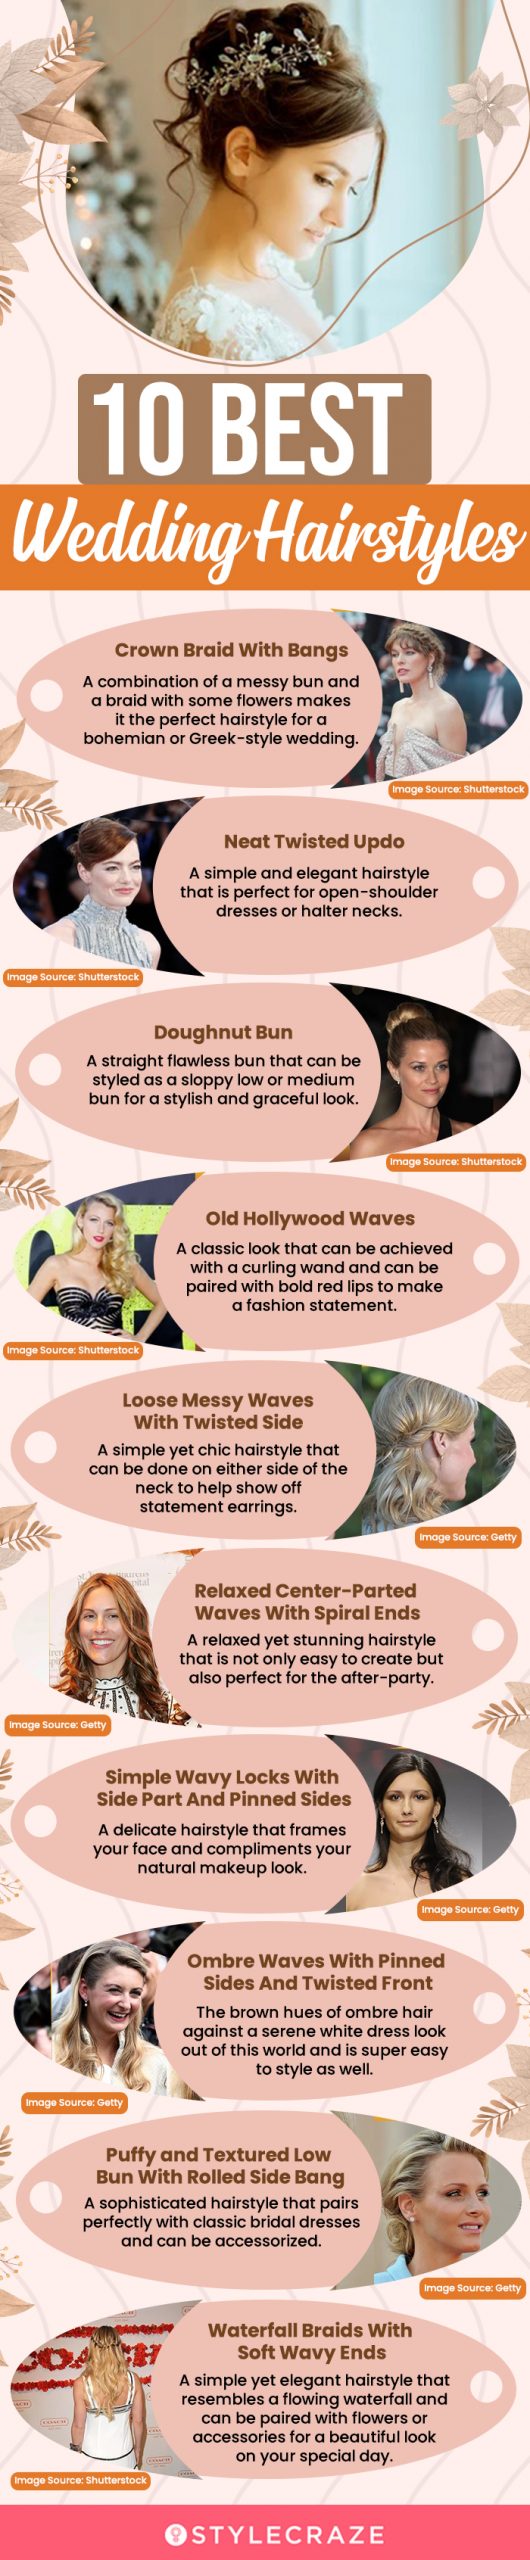 10 best wedding hairstyles (infographic)